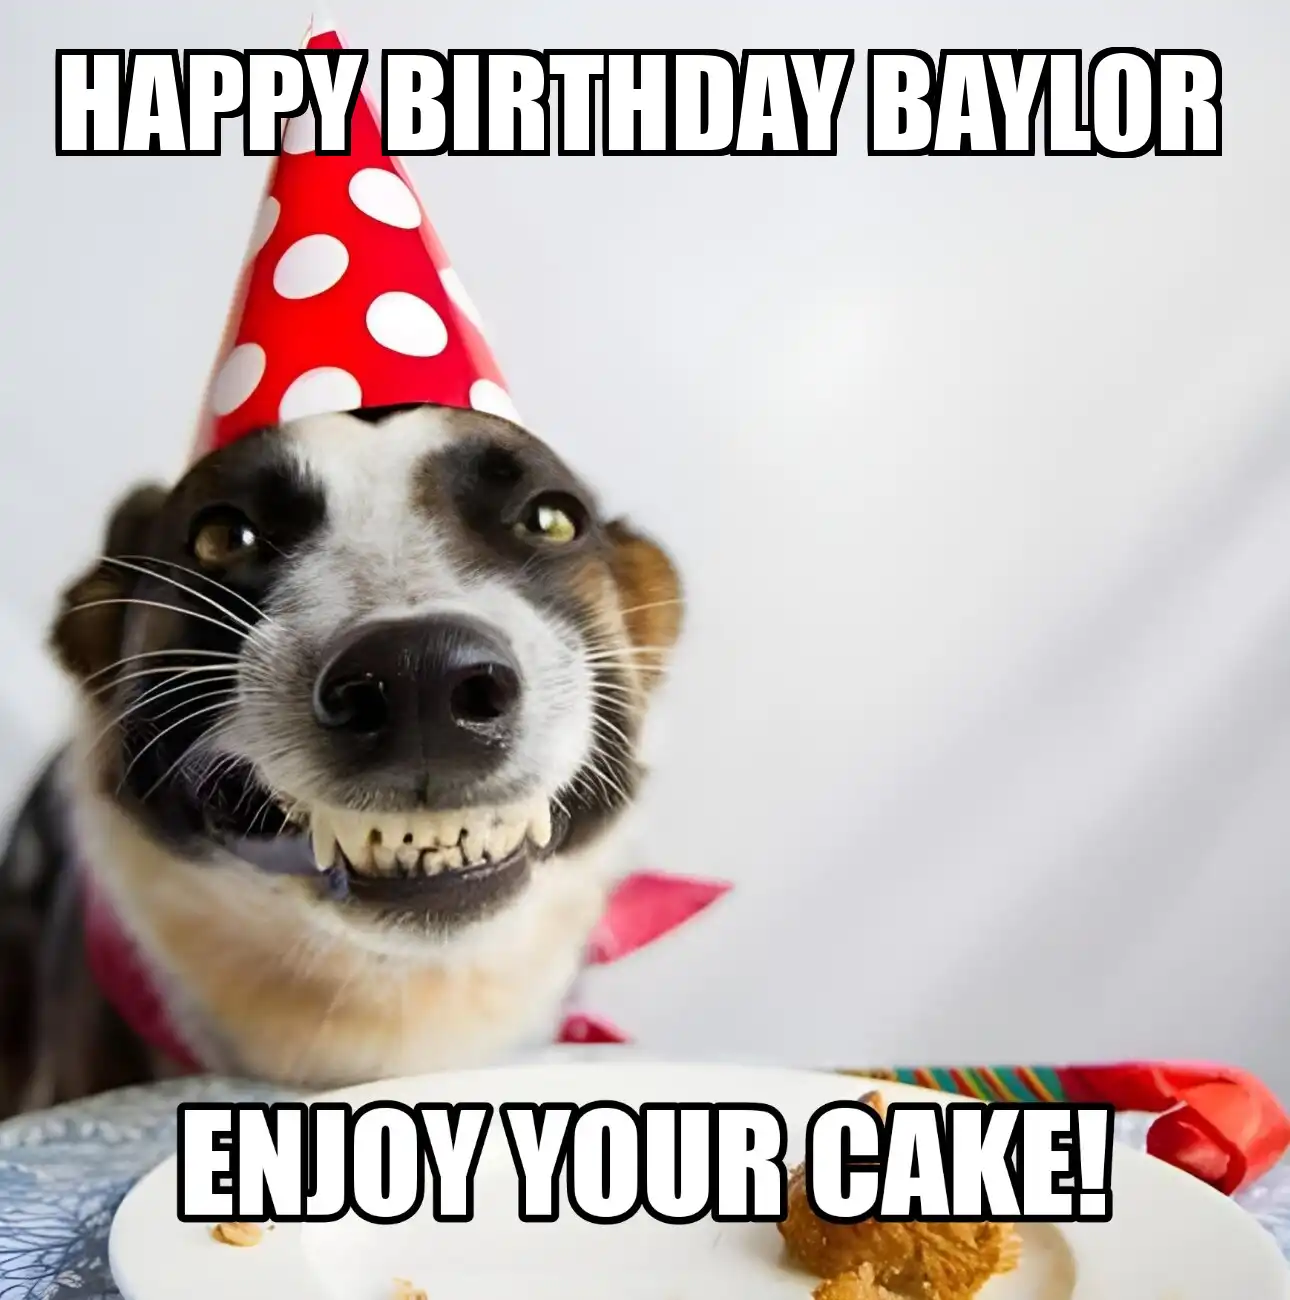 Happy Birthday Baylor Enjoy Your Cake Dog Meme